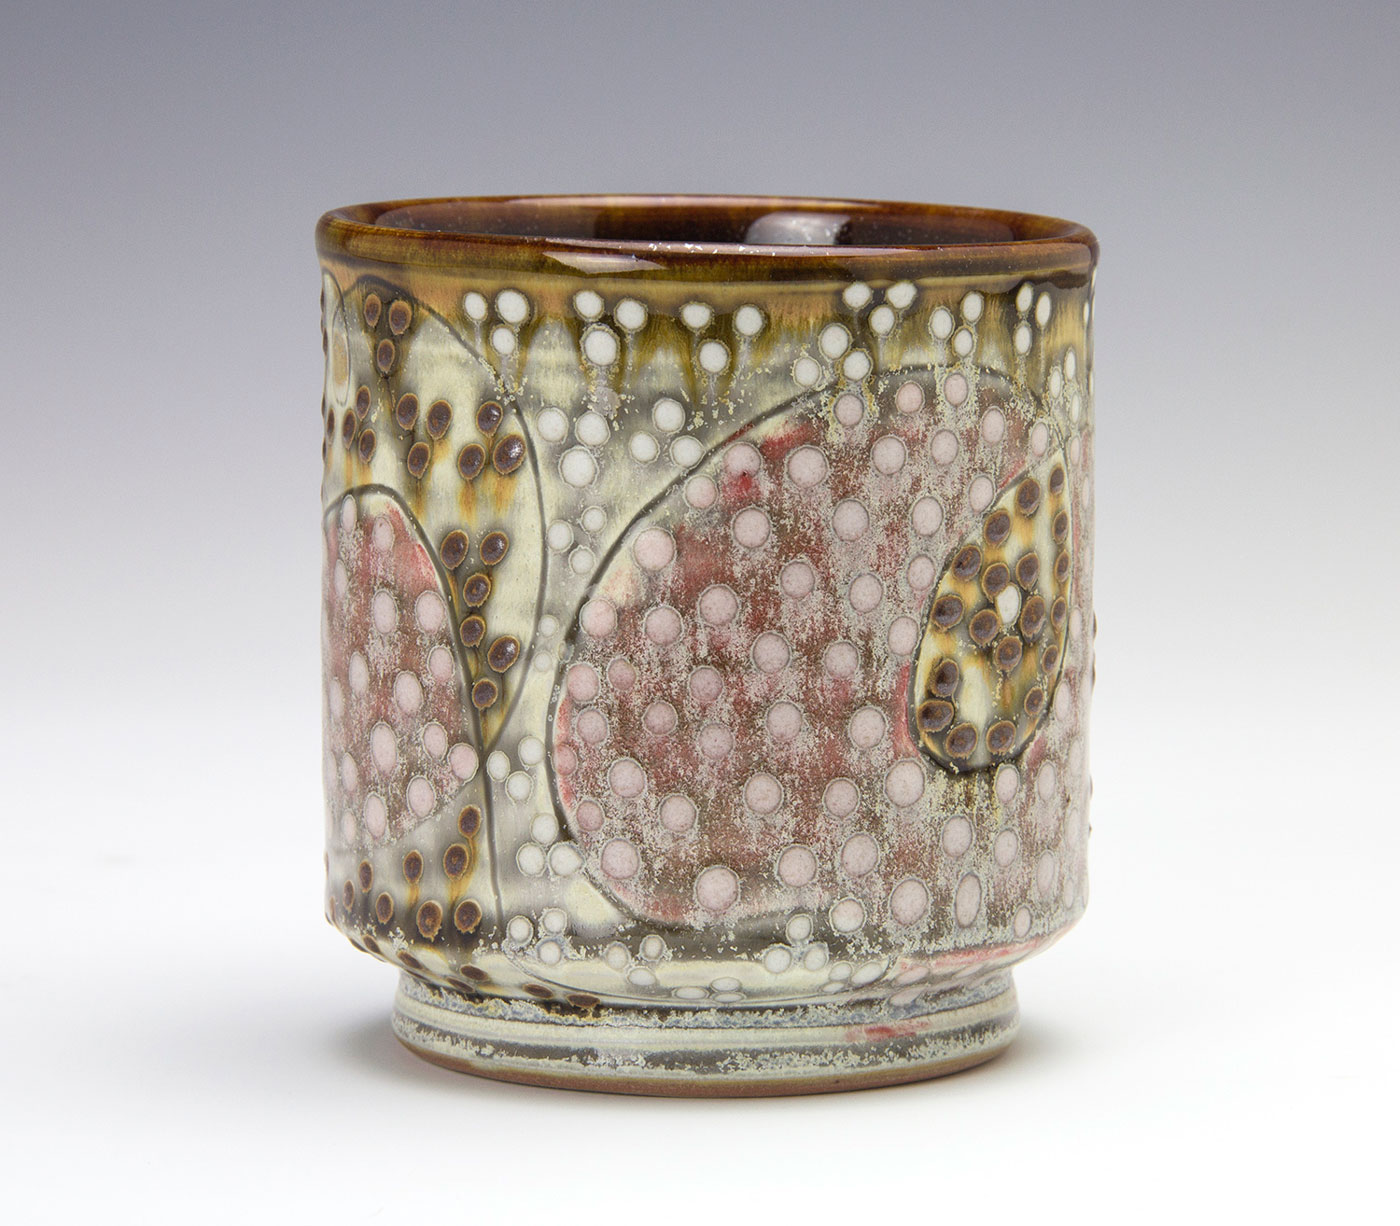 Pattern-Medley-studio-pottery-art-cup-Samantha-Henneke-Seagrove-North-Carolina.jpg